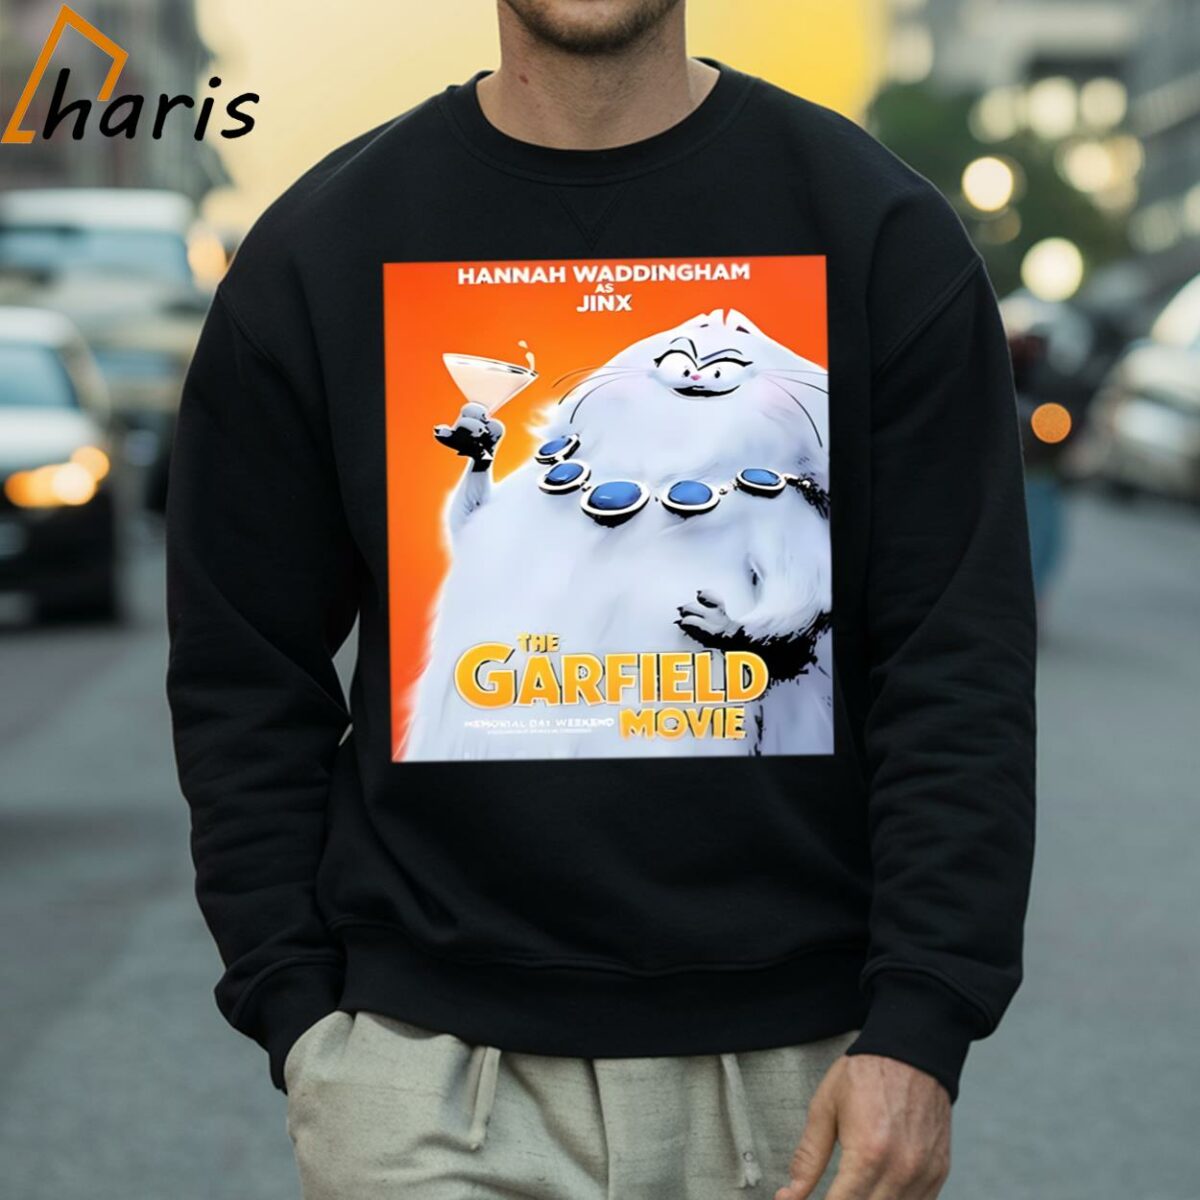 Hannah Waddingham As Jinx In The Garfield Movie Shirt 4 Sweatshirt